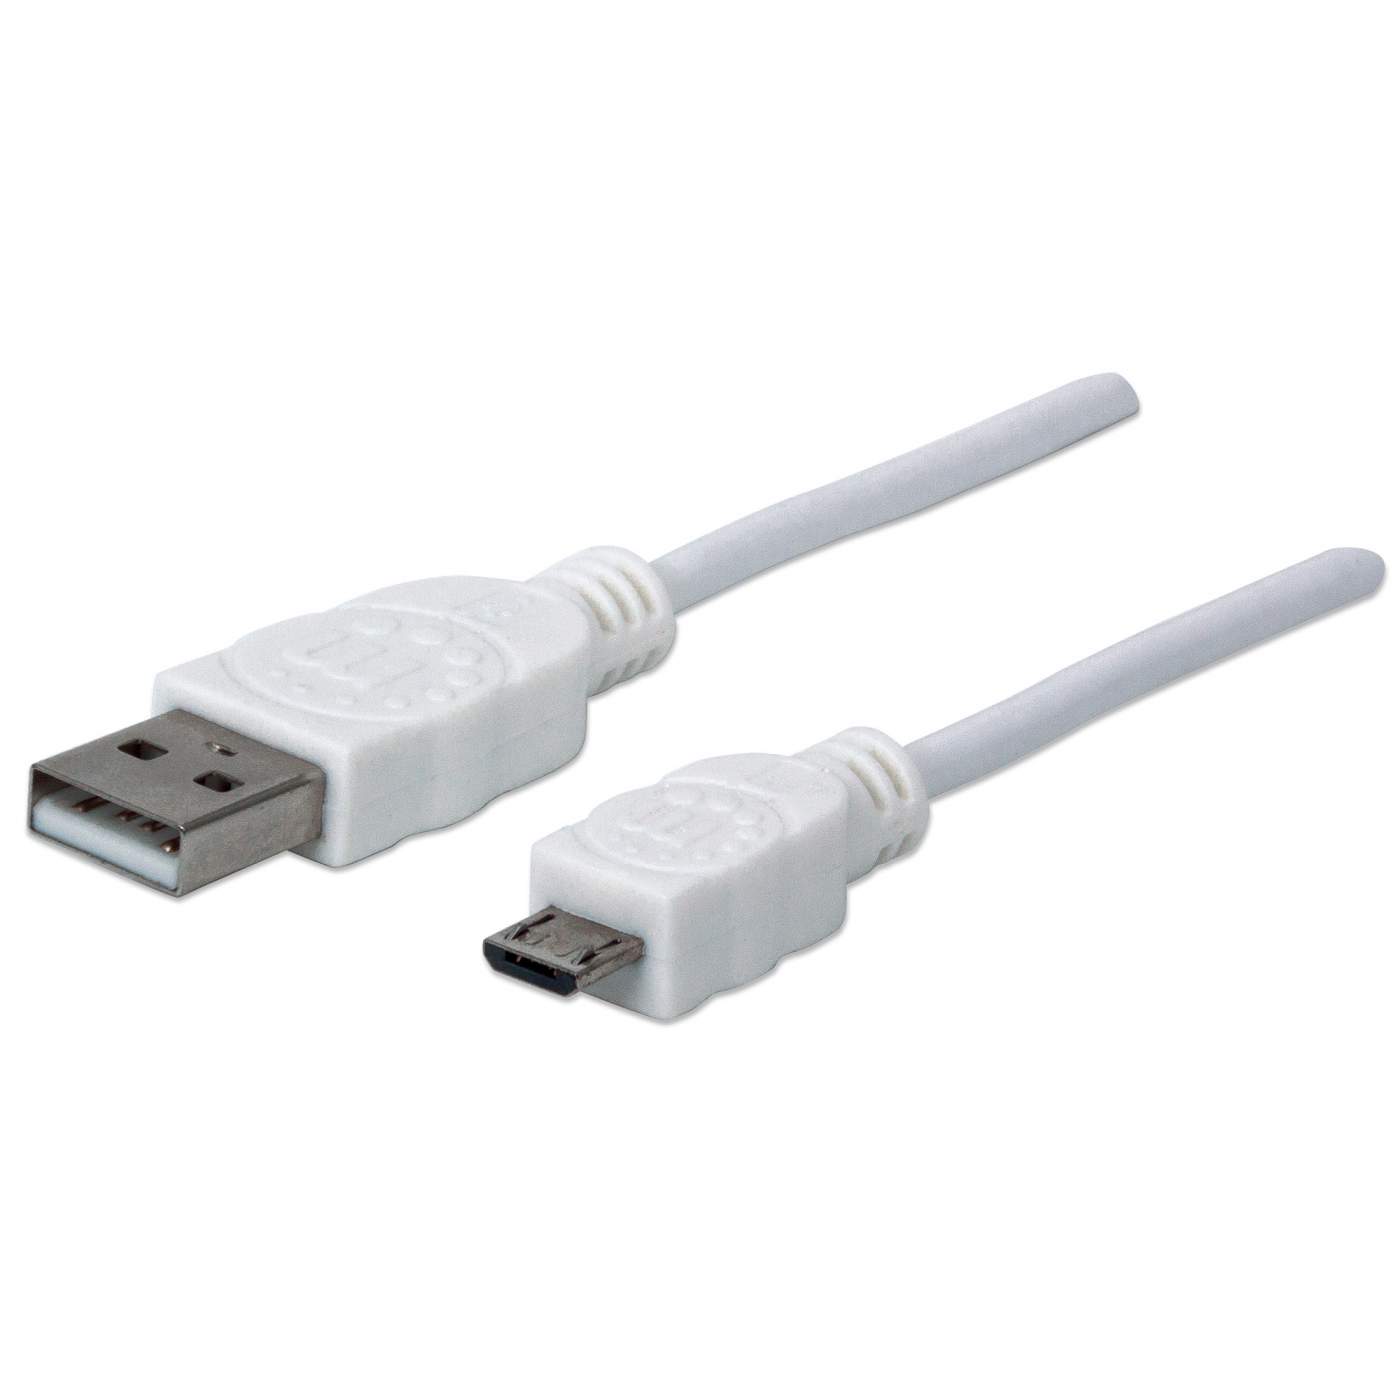 Hi-Speed USB Micro-B Device Cable